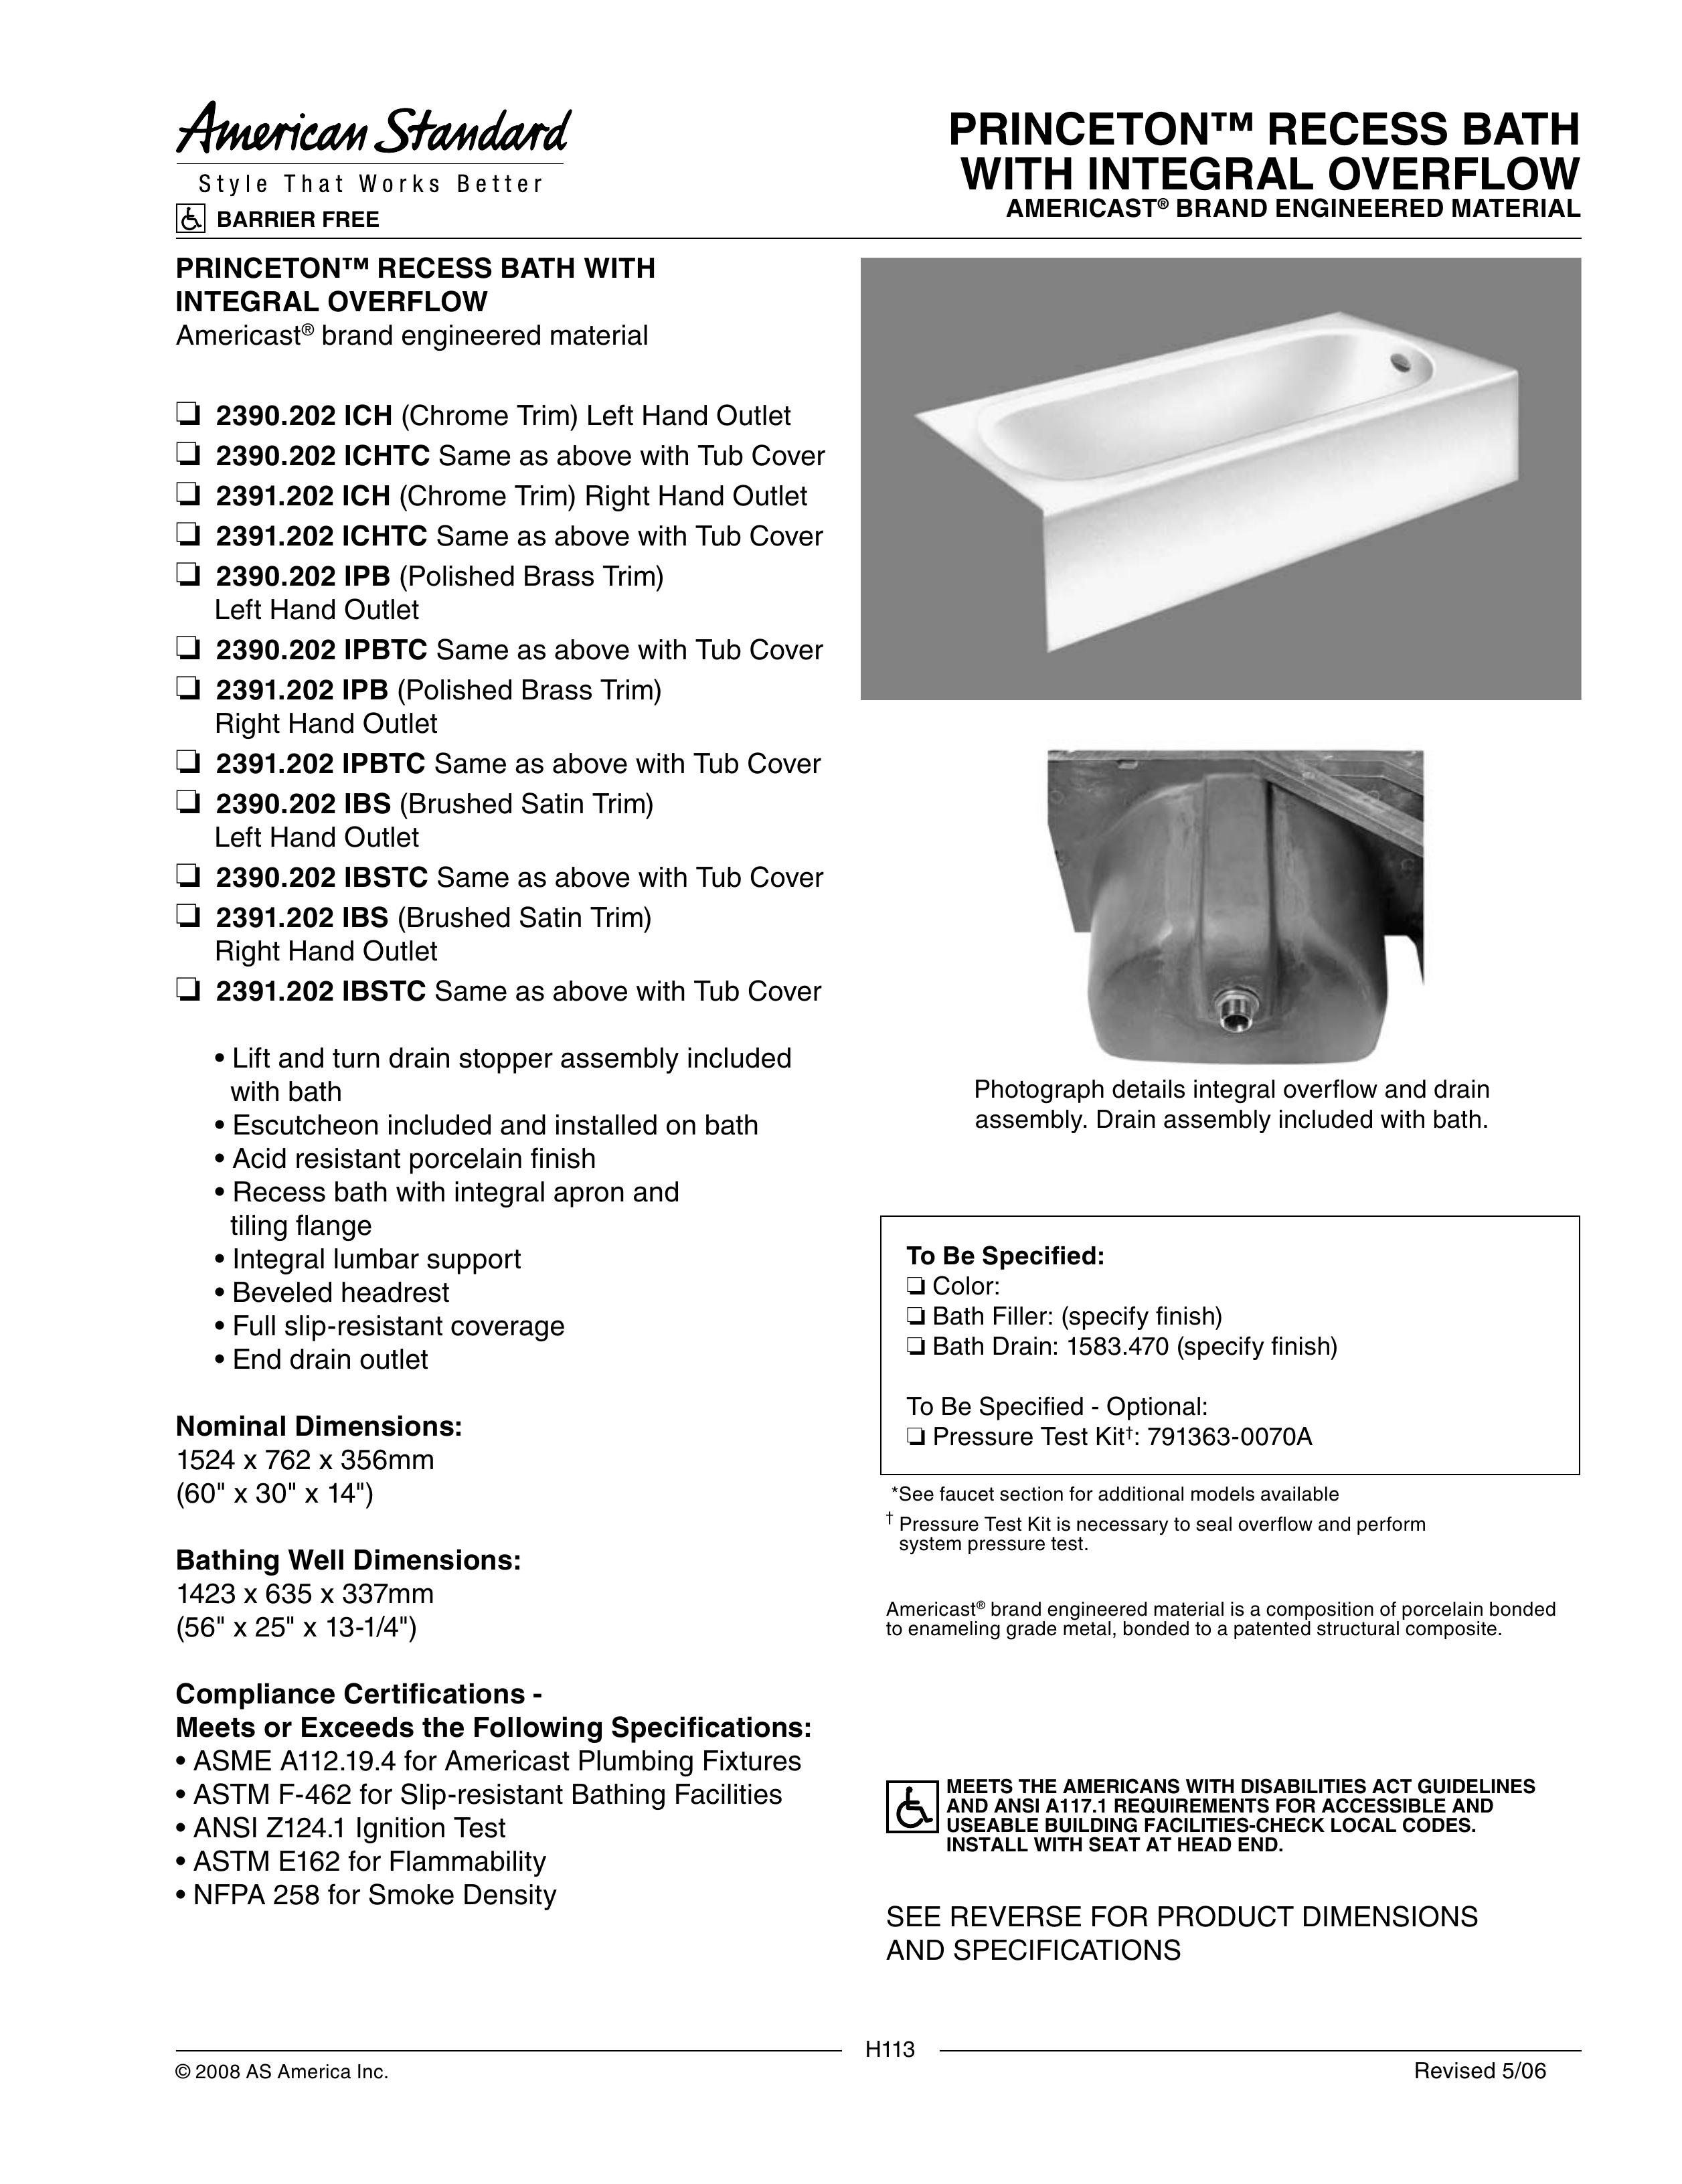 American Standard 2390.202 IBSTC Hot Tub User Manual